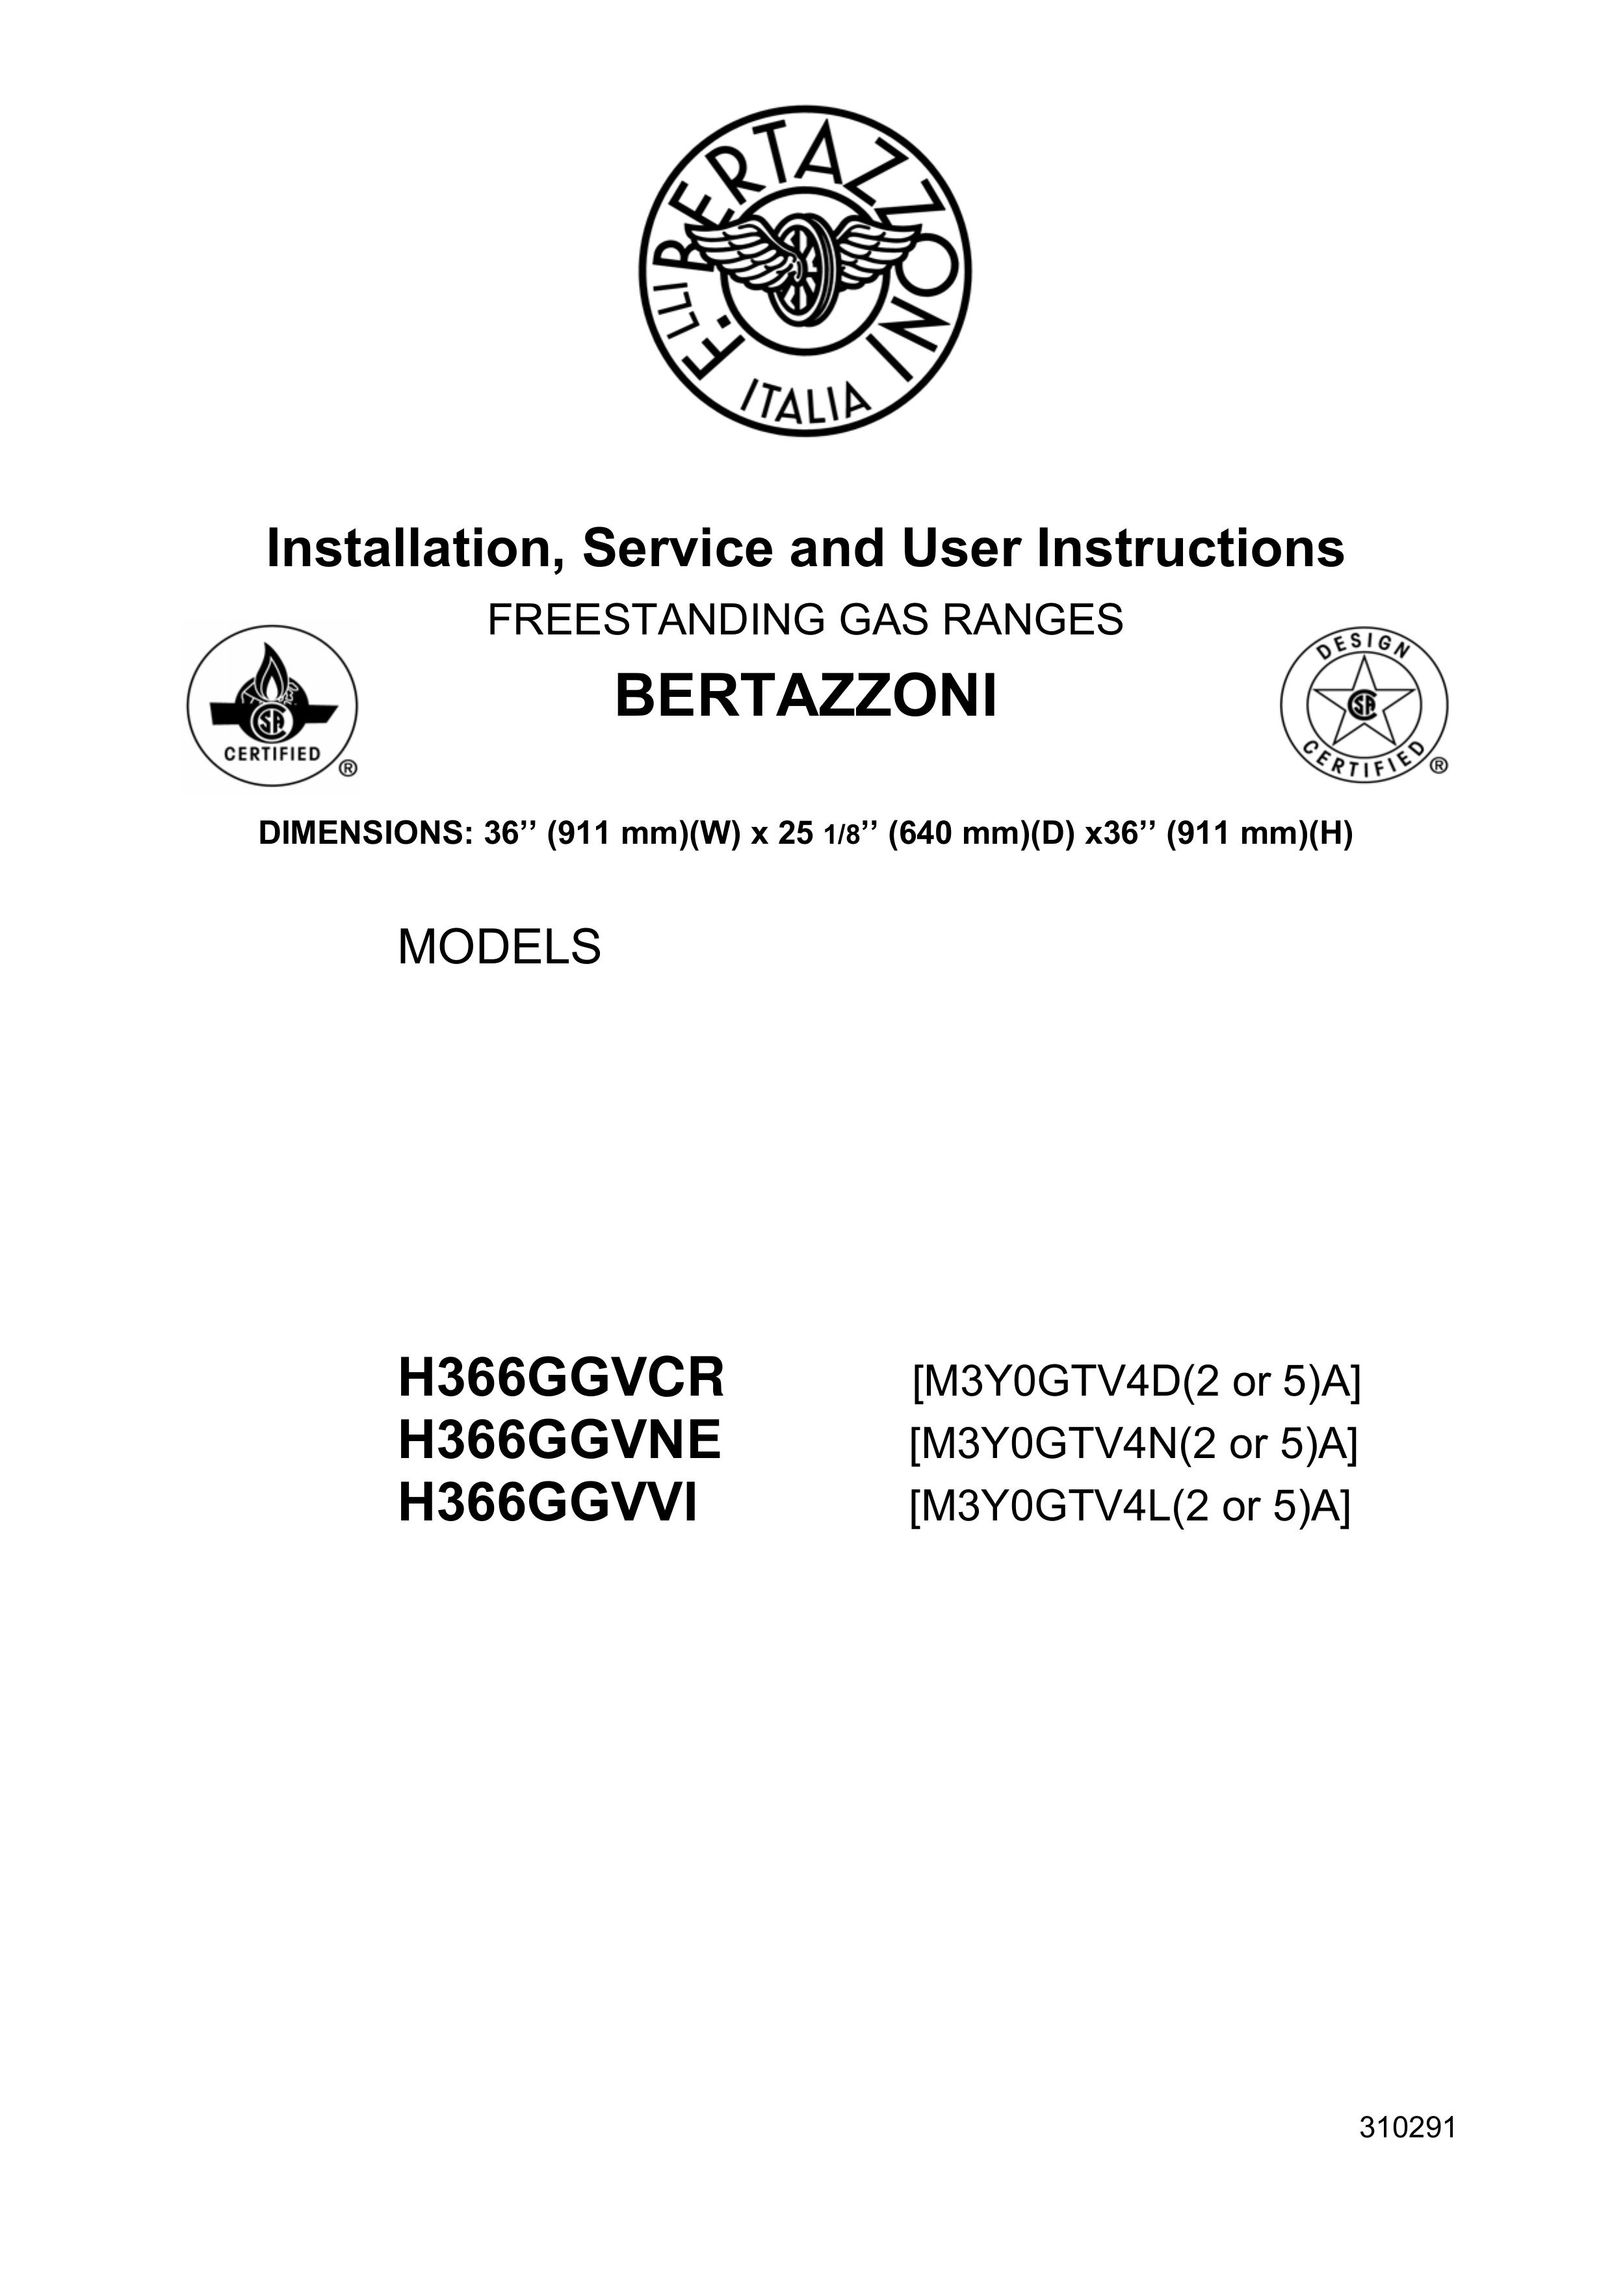 Bertazzoni H366GGVCR Range User Manual